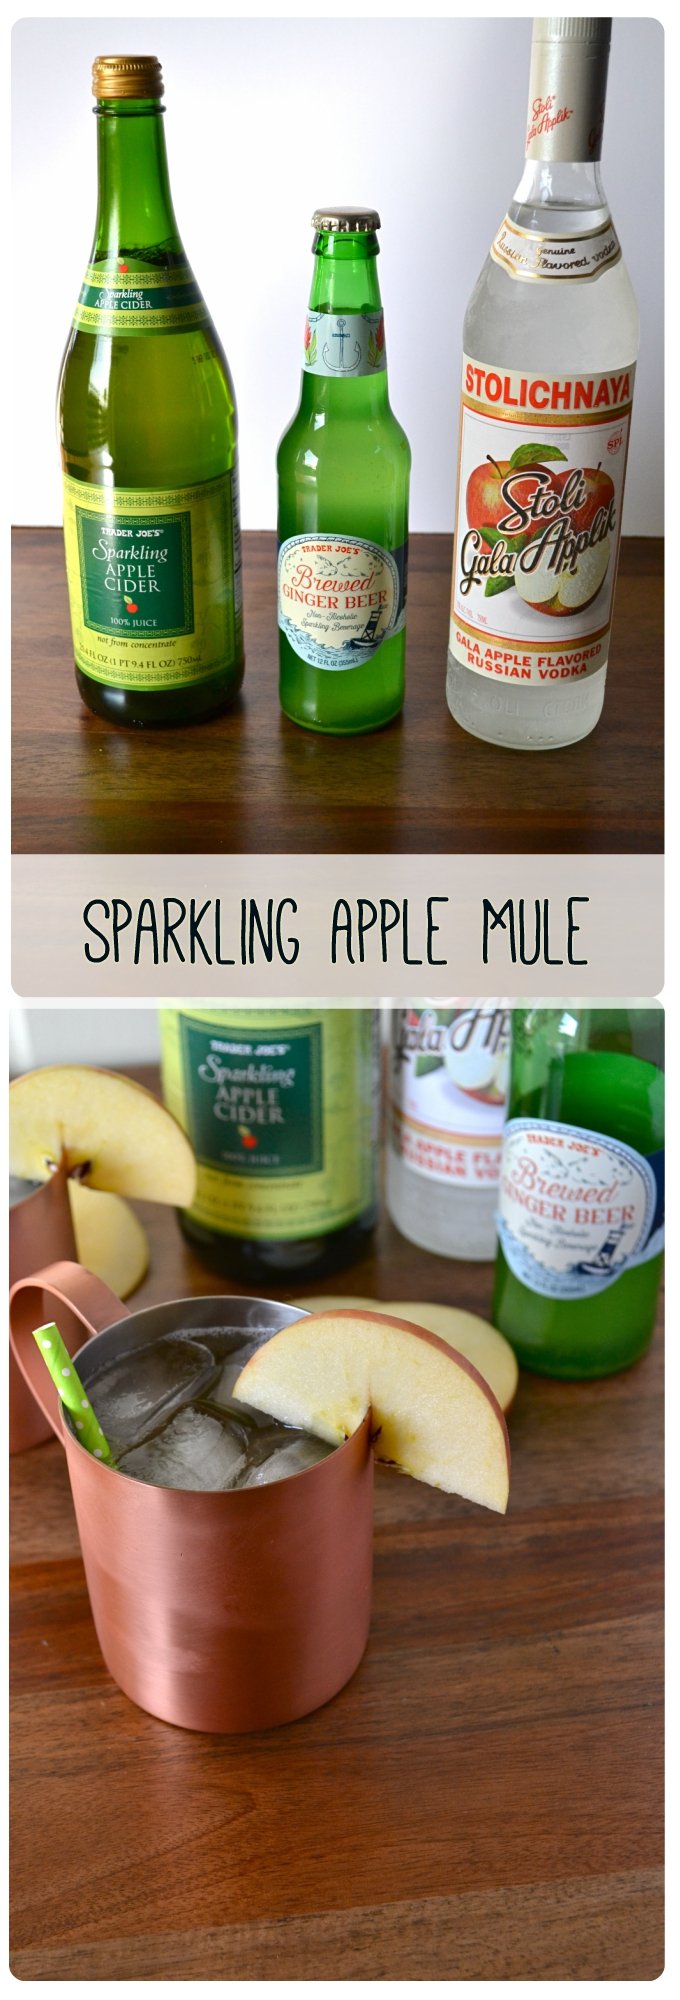 Sparkling Apple Mule